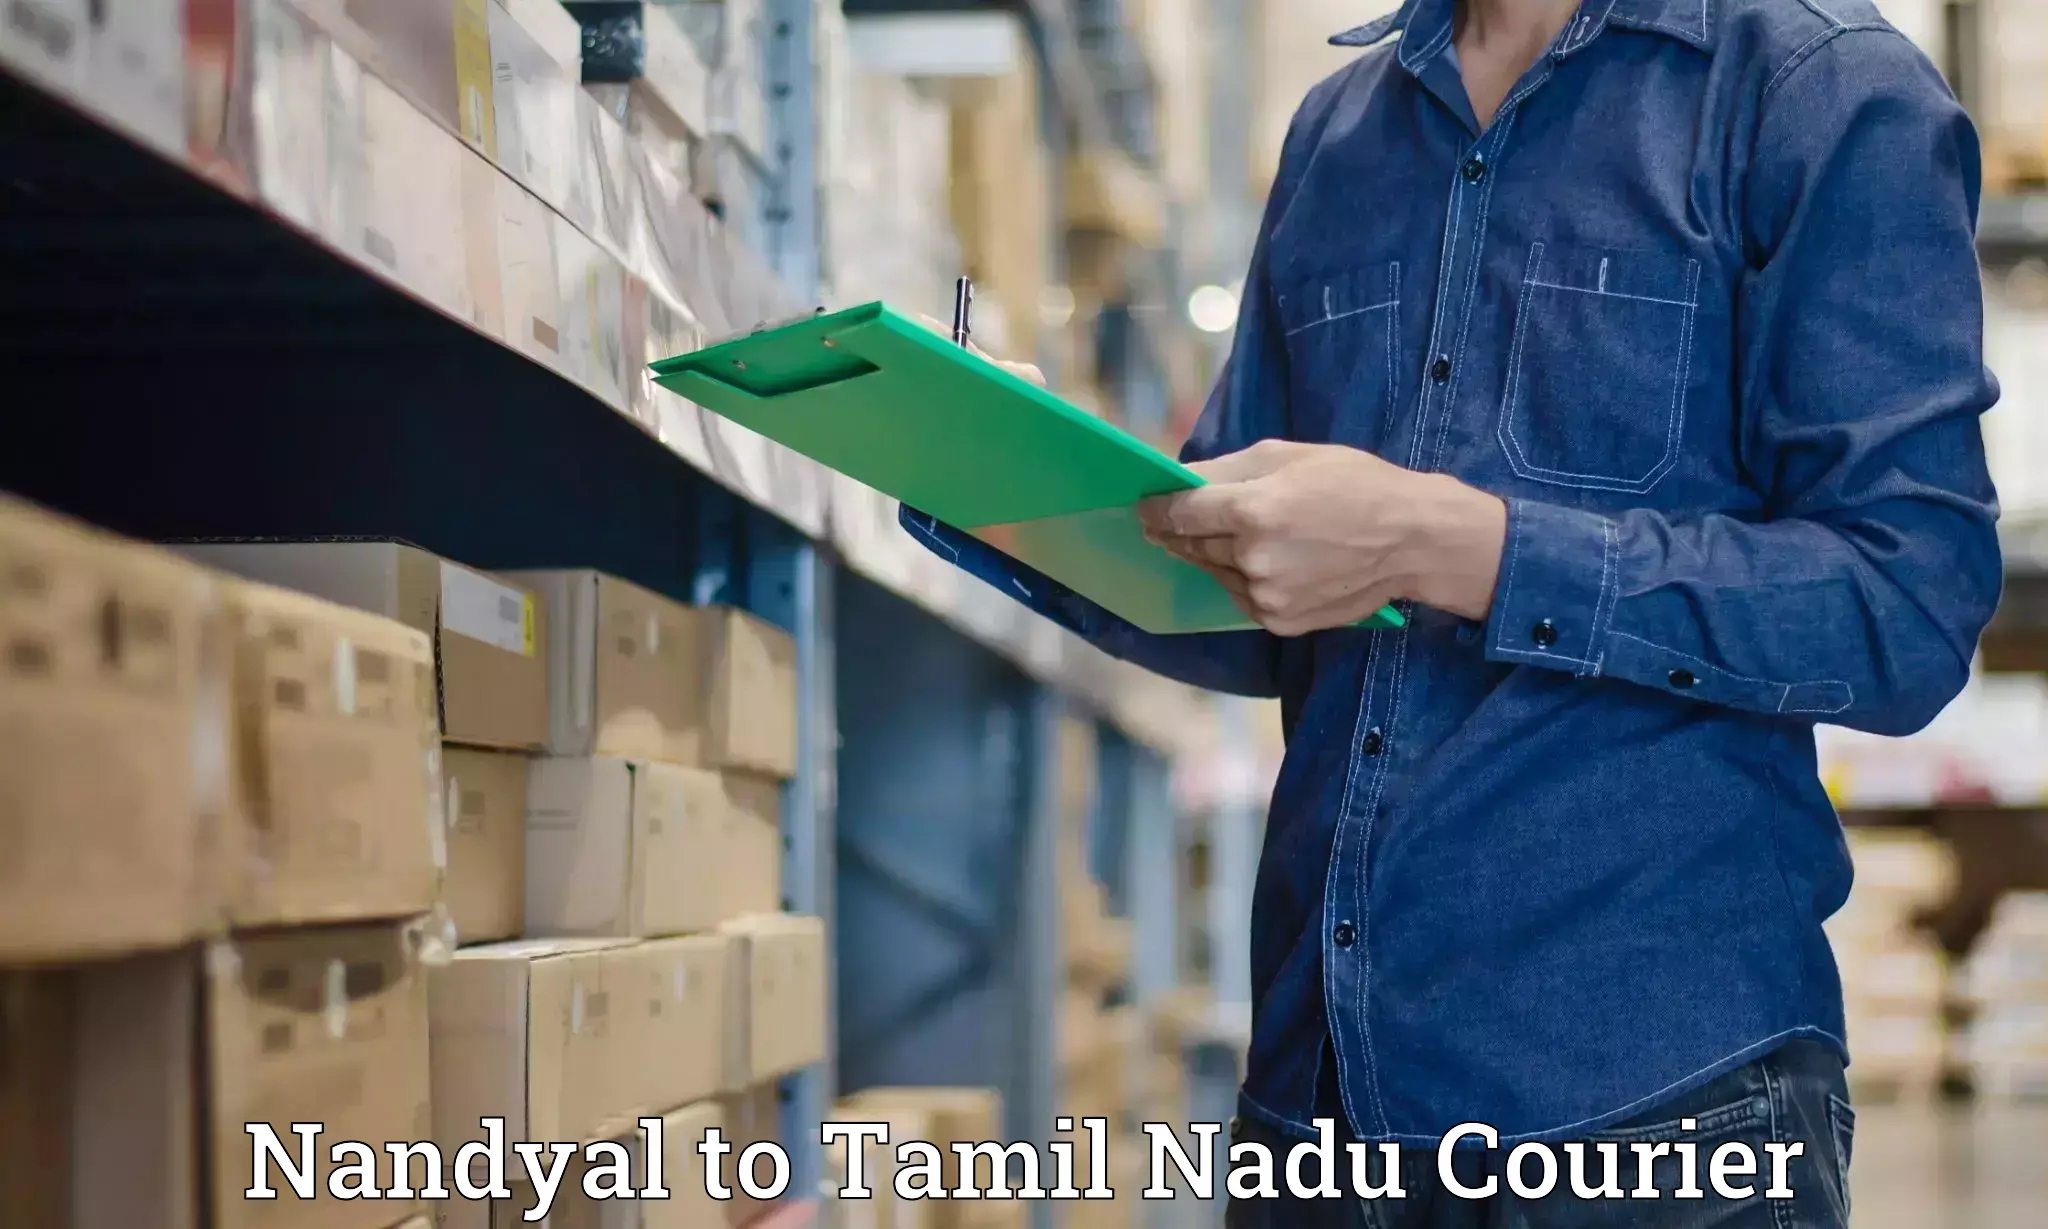 User-friendly delivery service Nandyal to Tamil Nadu